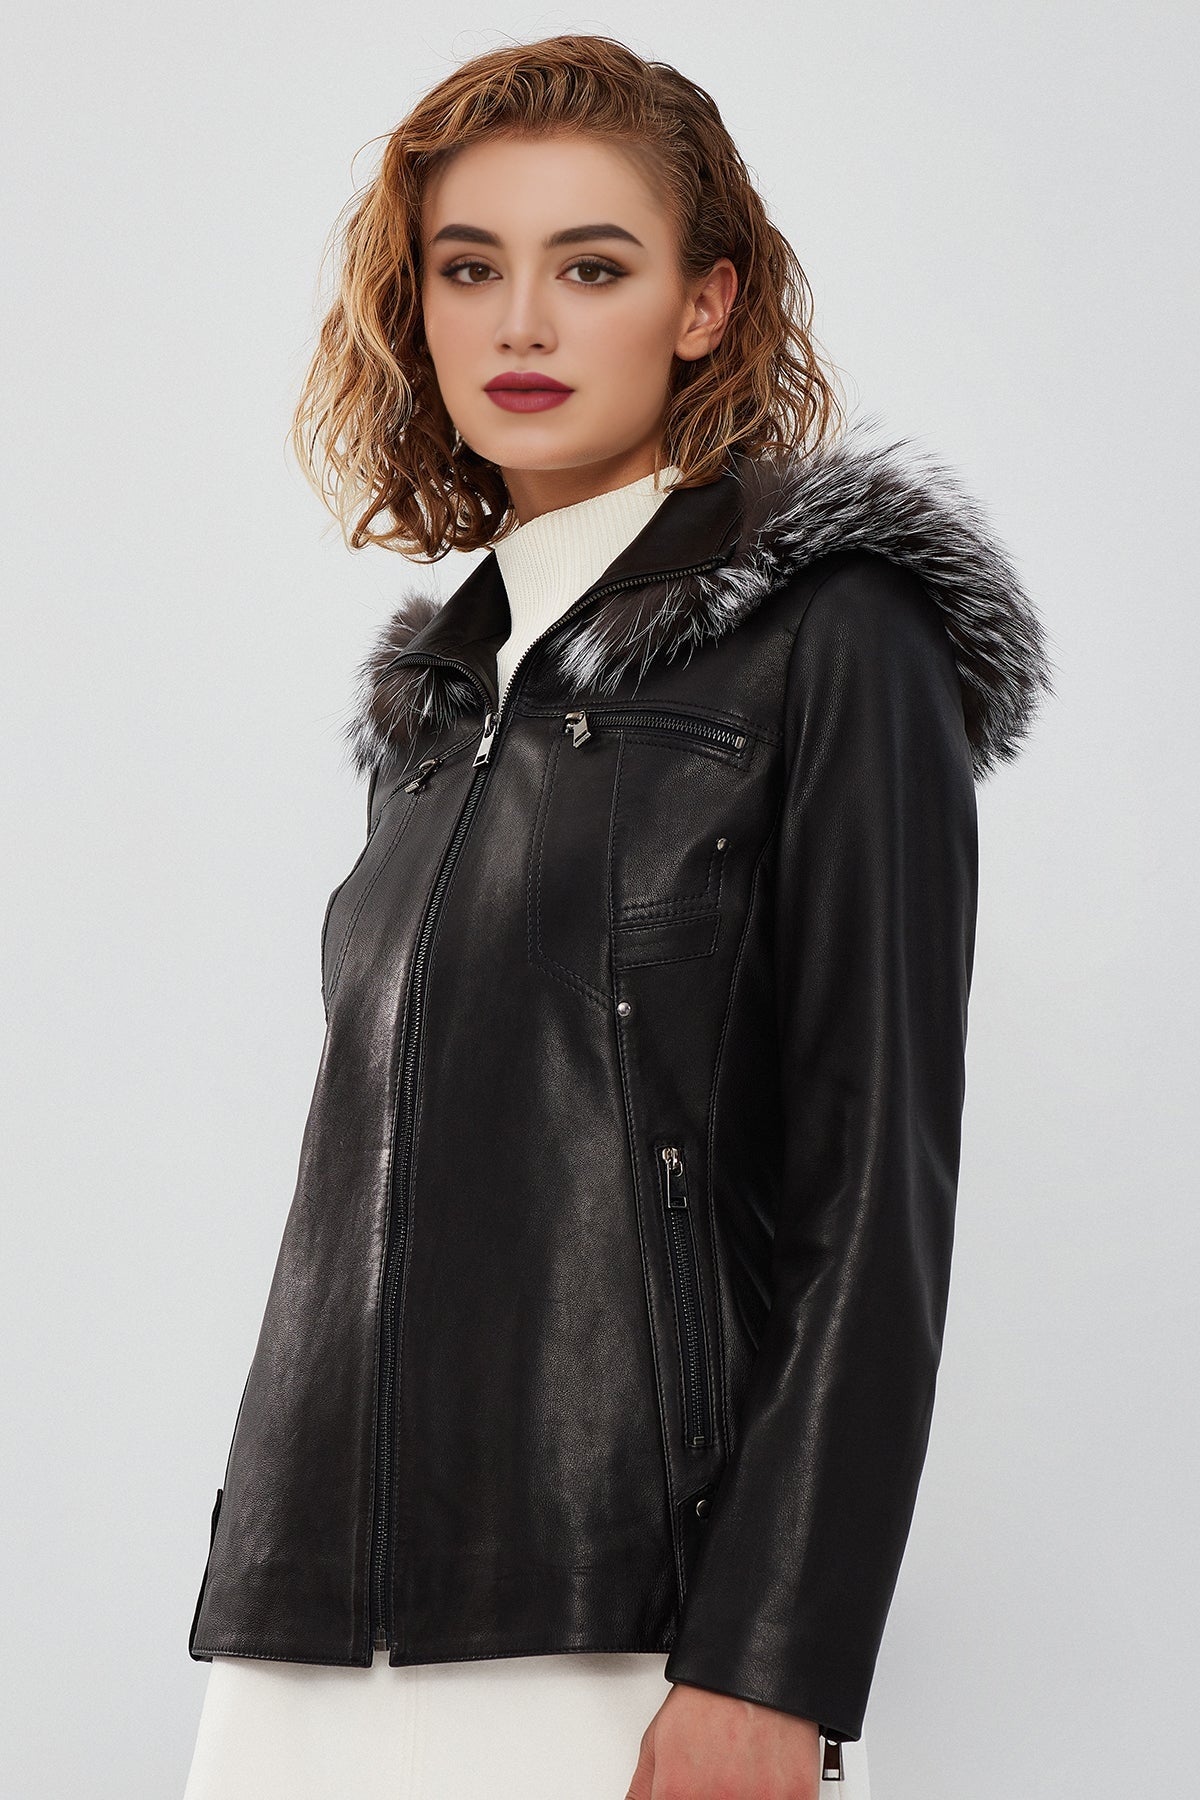 Audrey Women's Black Hooded Fur Leather Coat